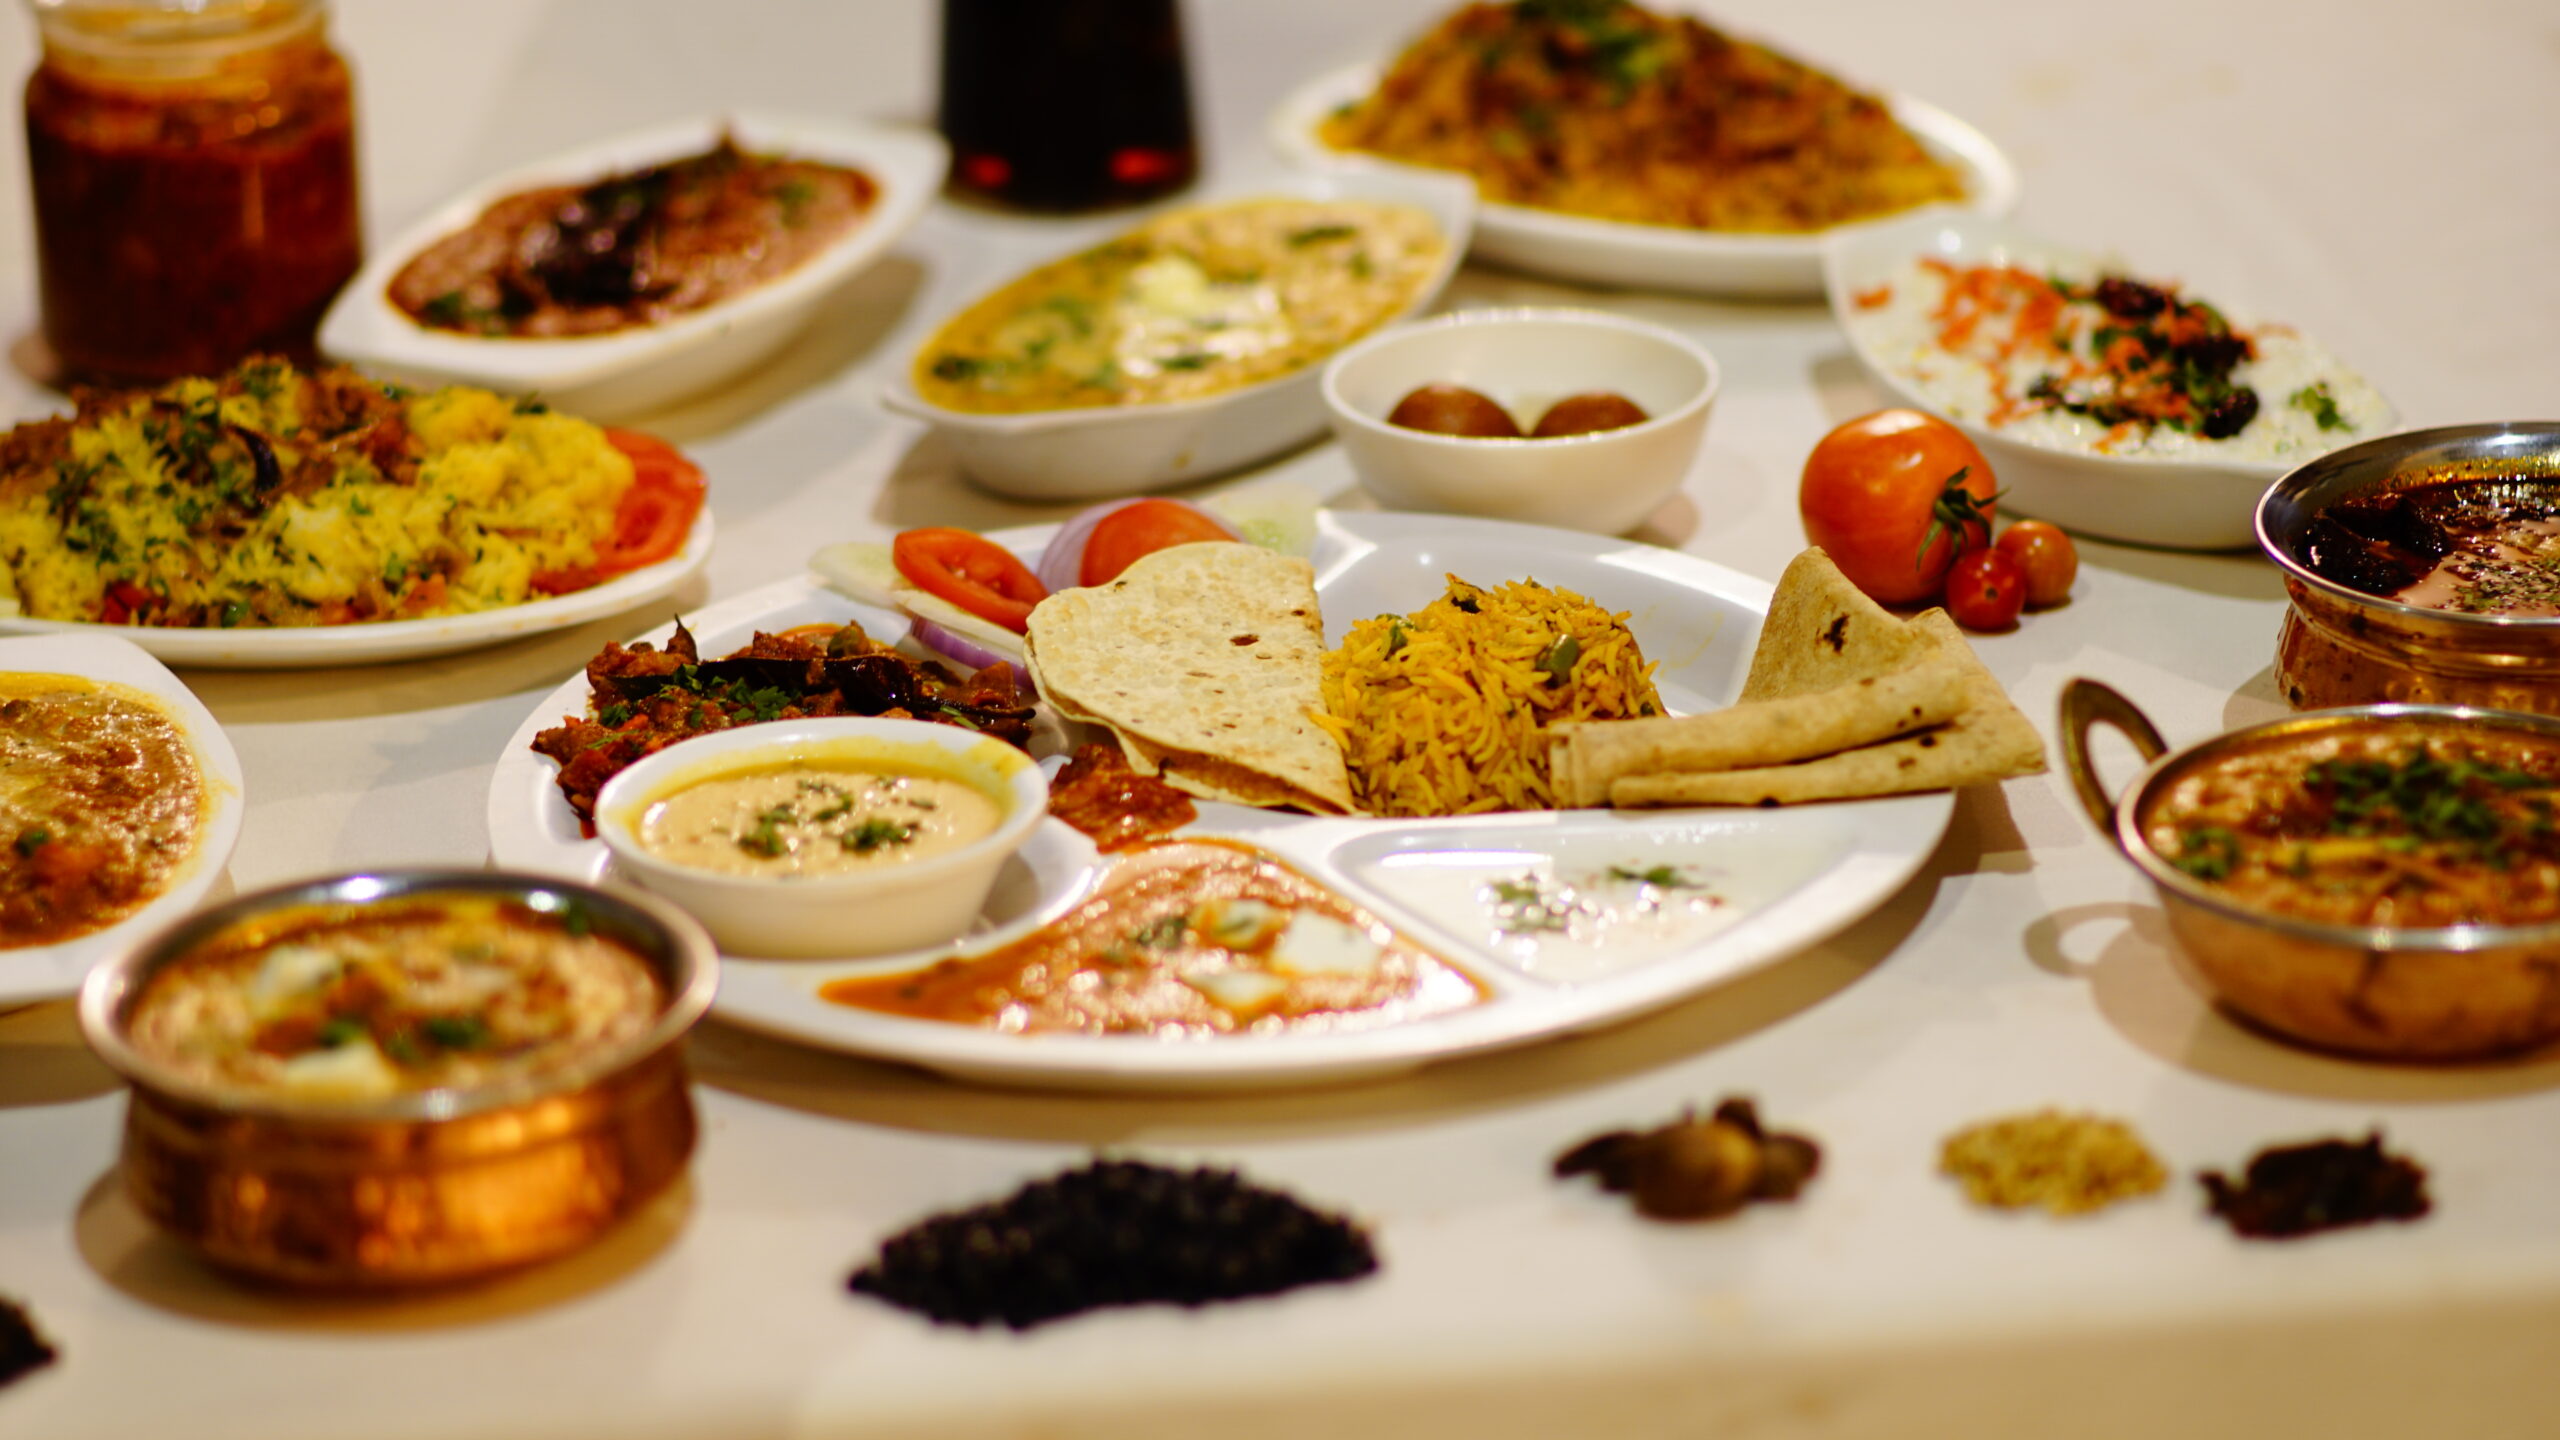 What makes Indian Food Unique?